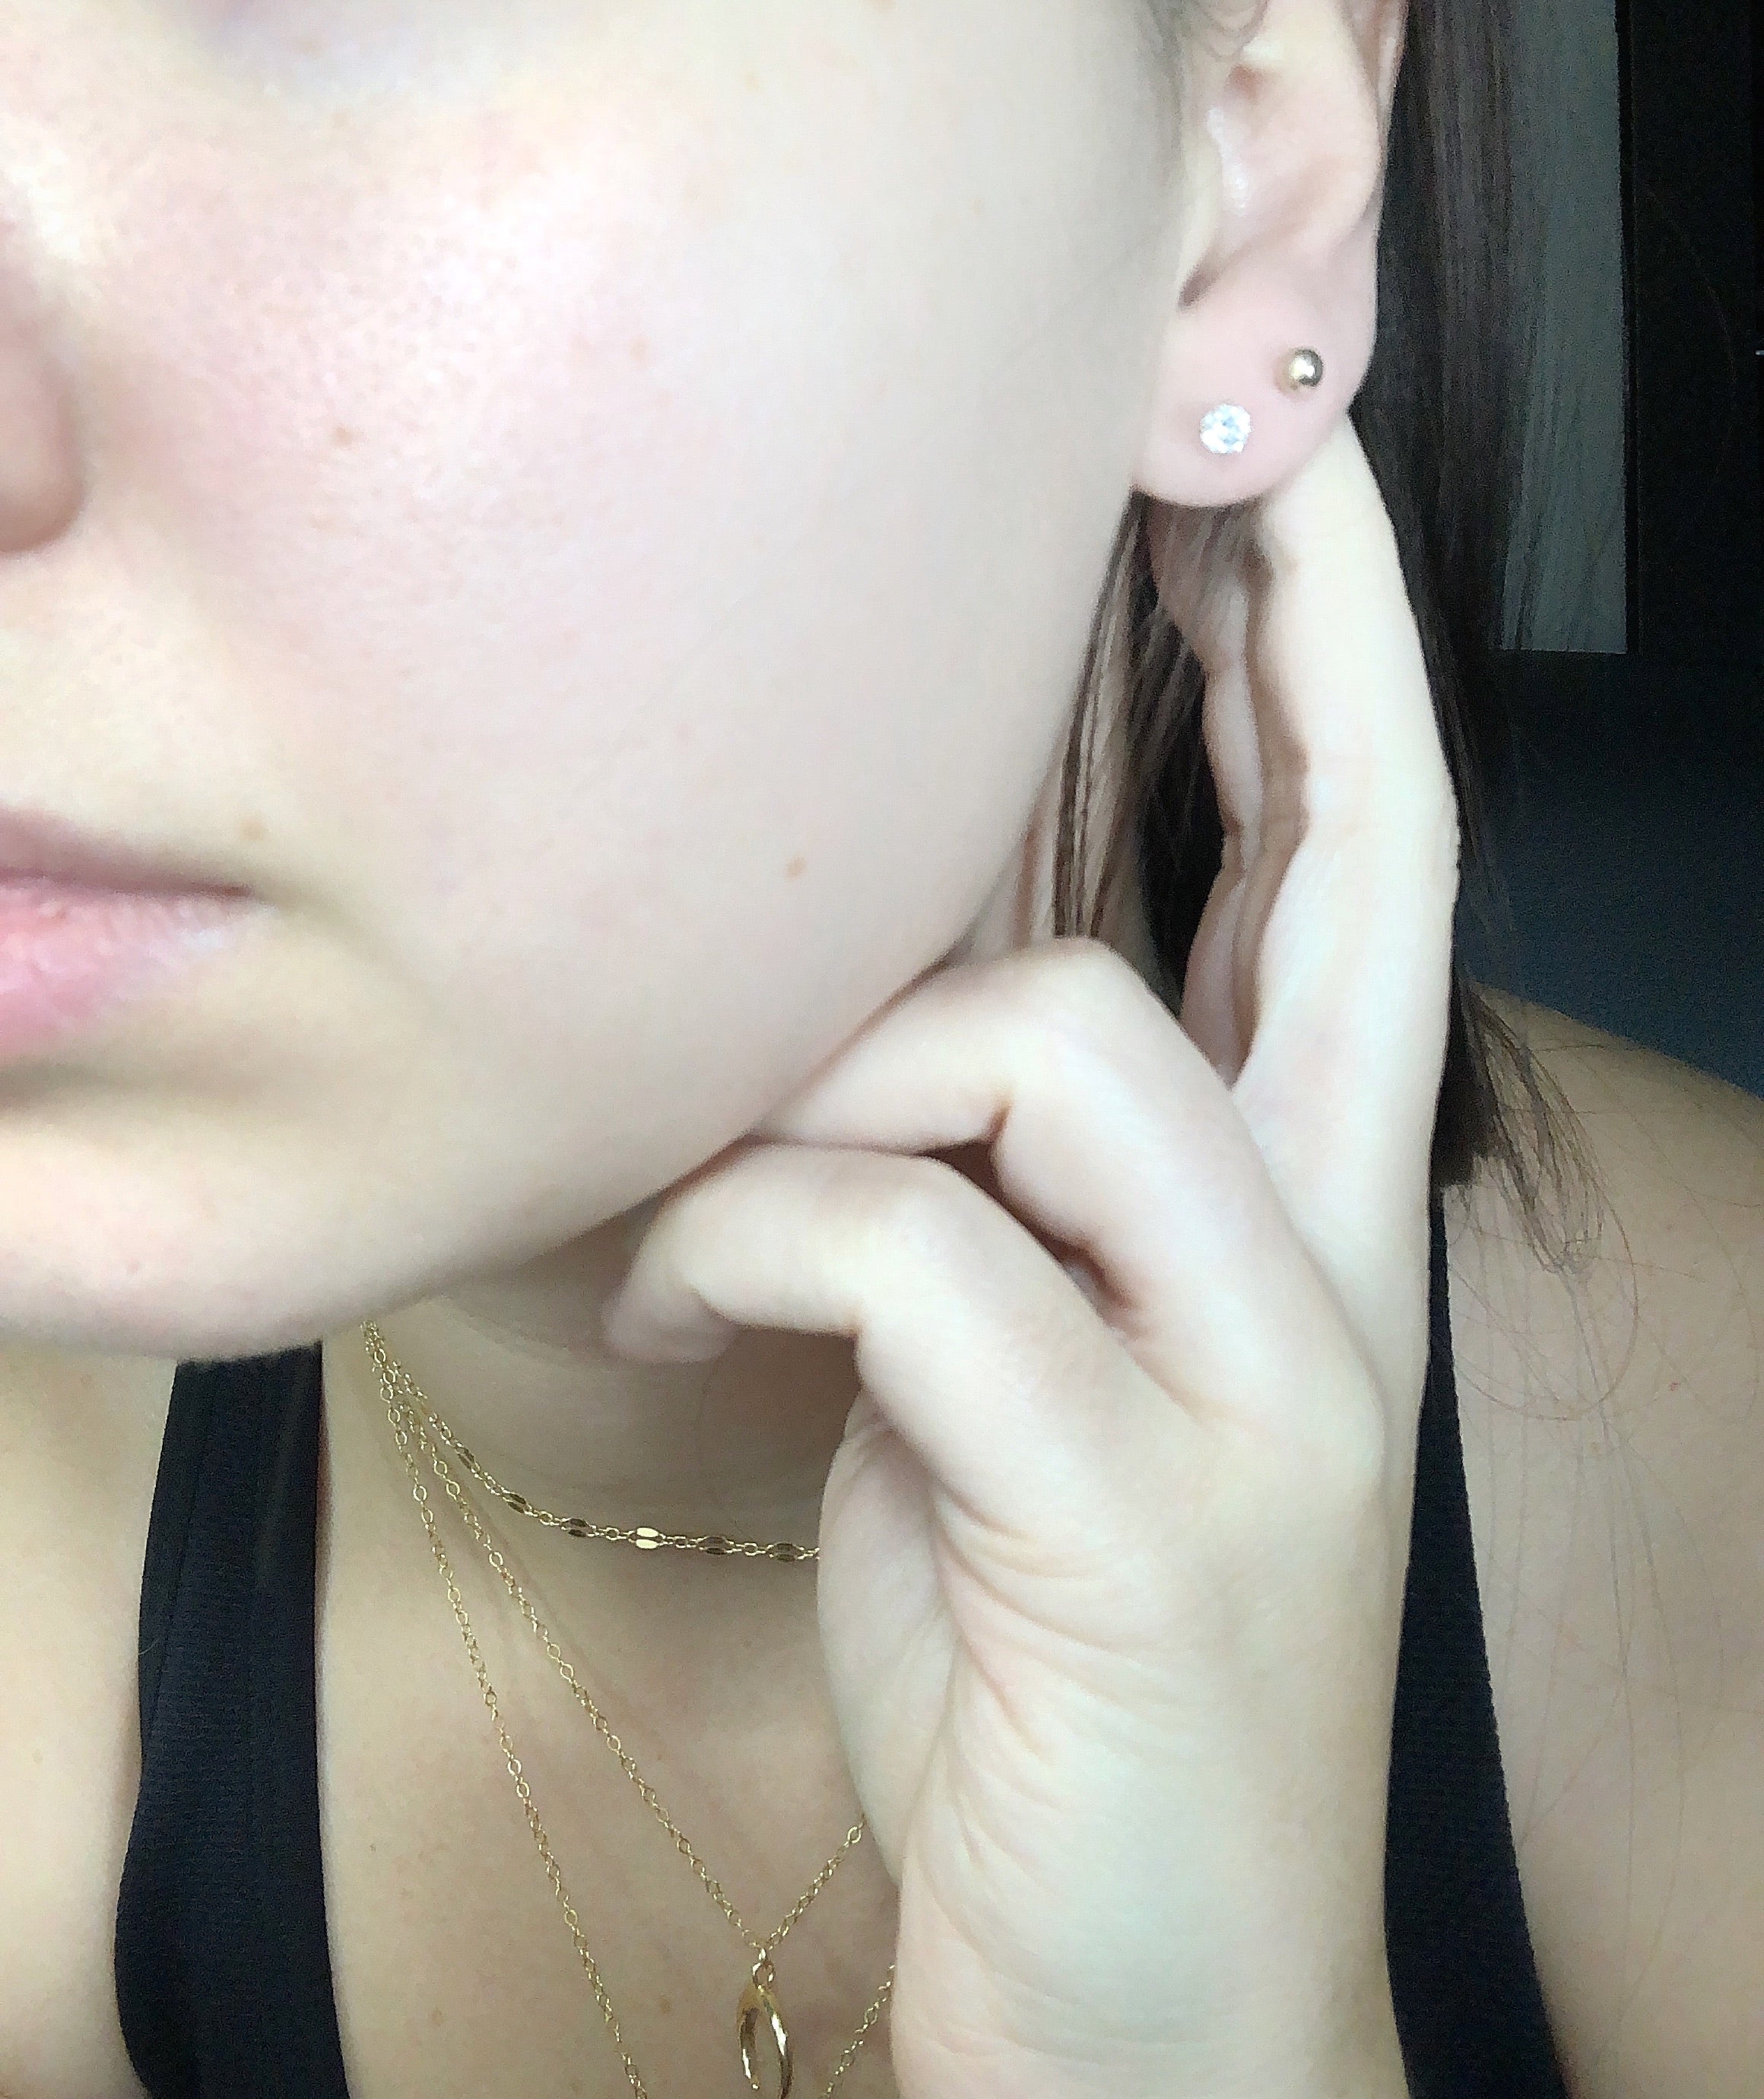 Lexi post earrings